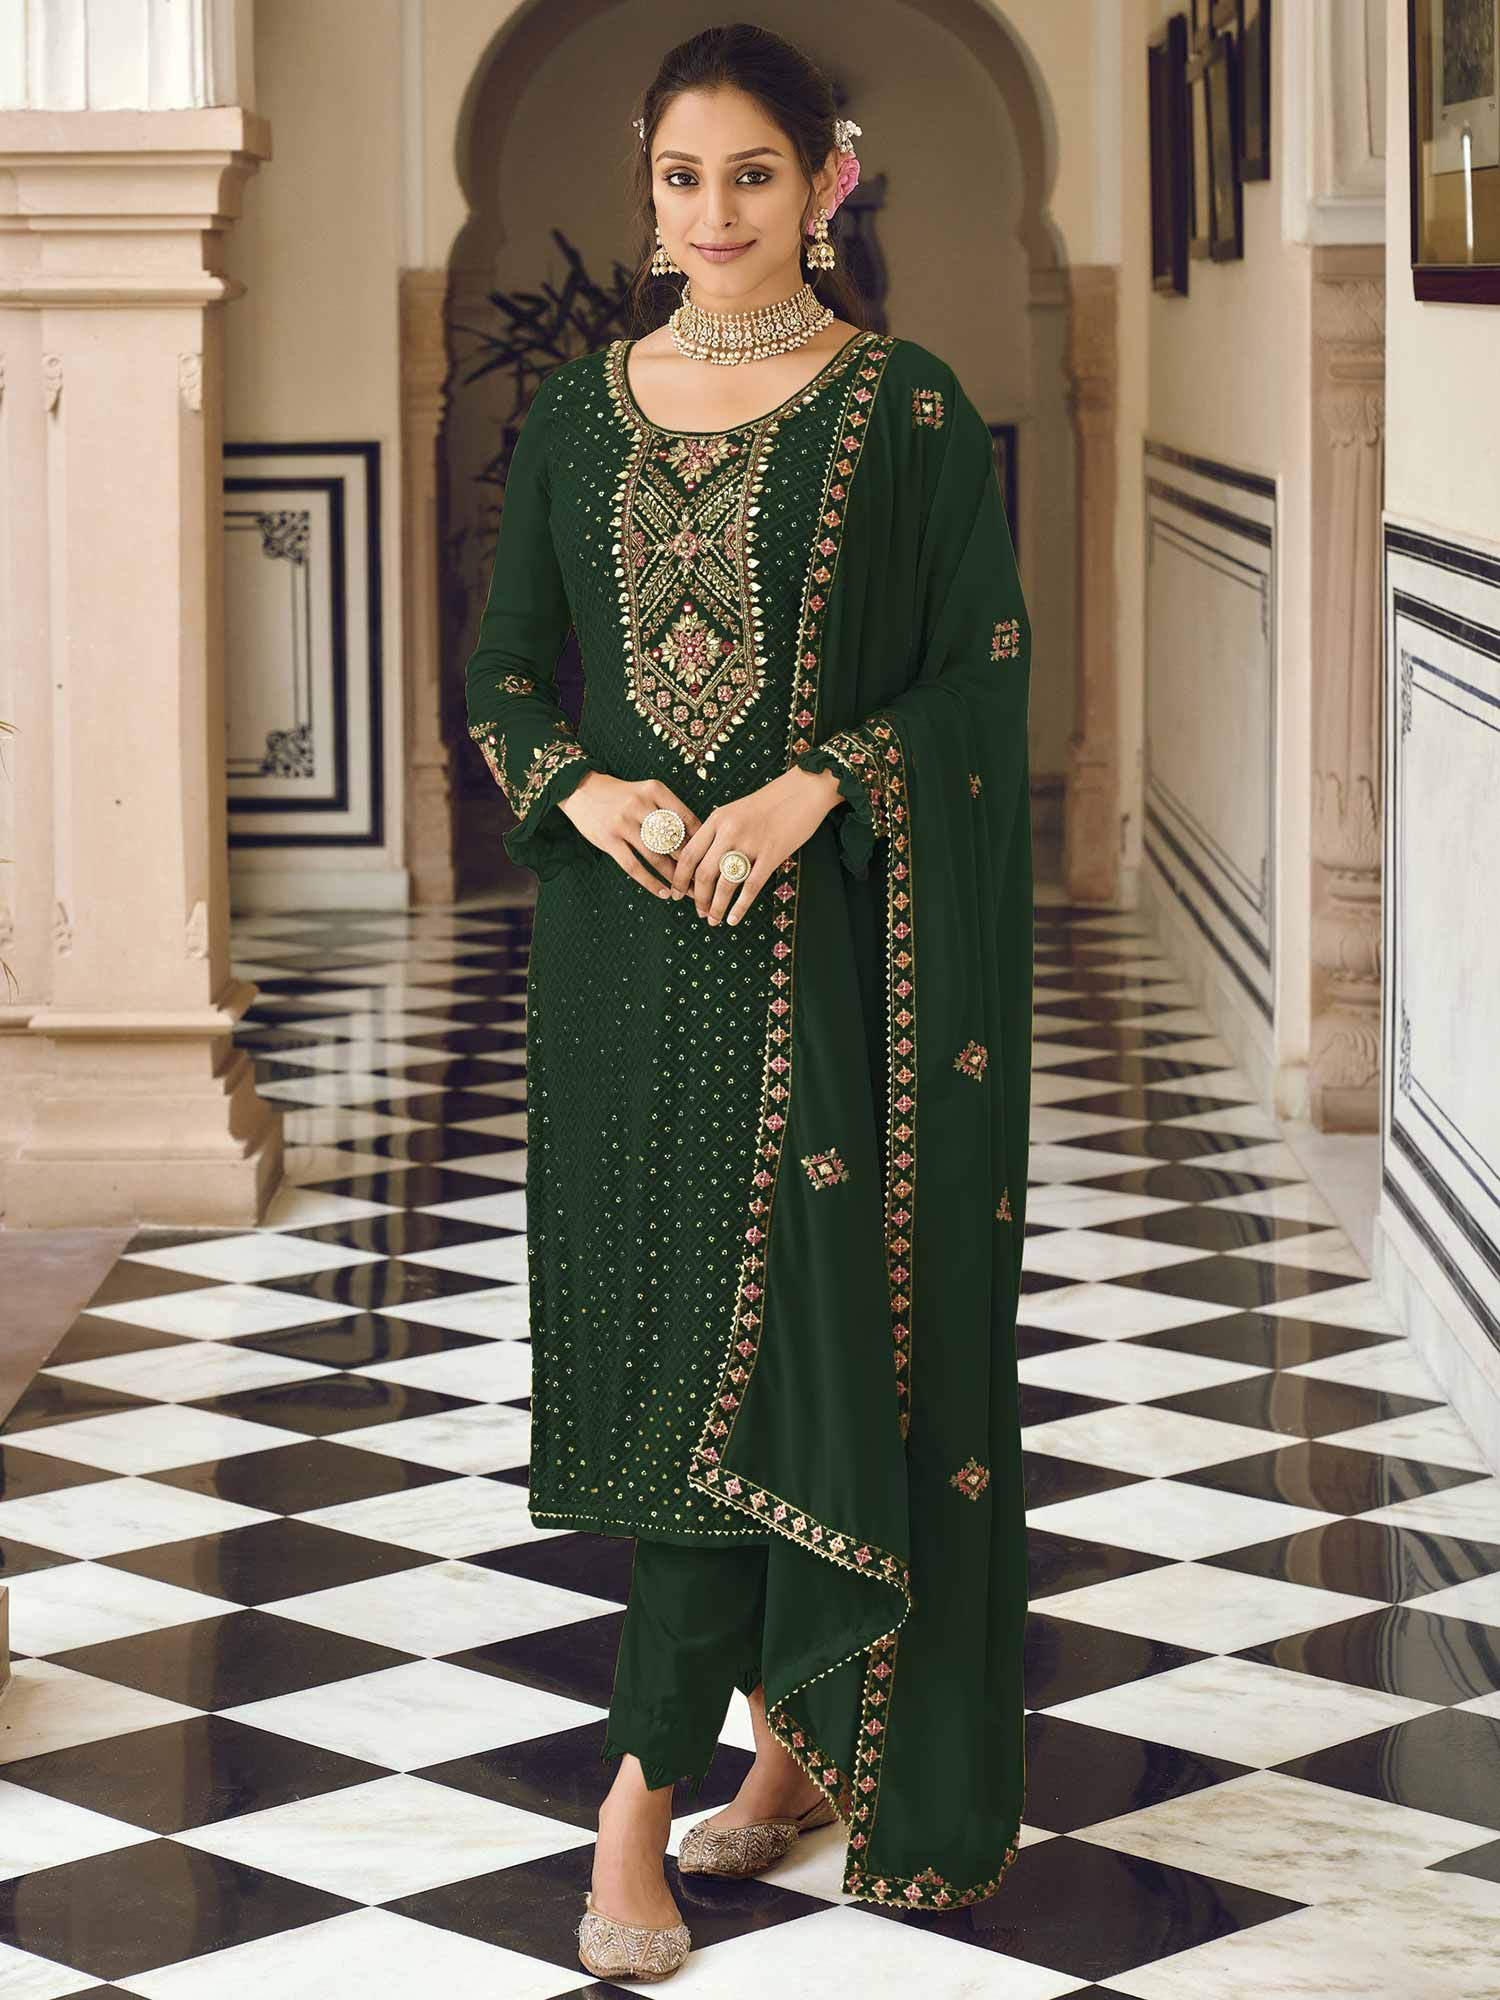 Latest 50 Green Salwar Kameez Designs For Women (2022) - Tips and Beauty |  Kameez designs, Salwar kameez designs, Gorgeous dresses